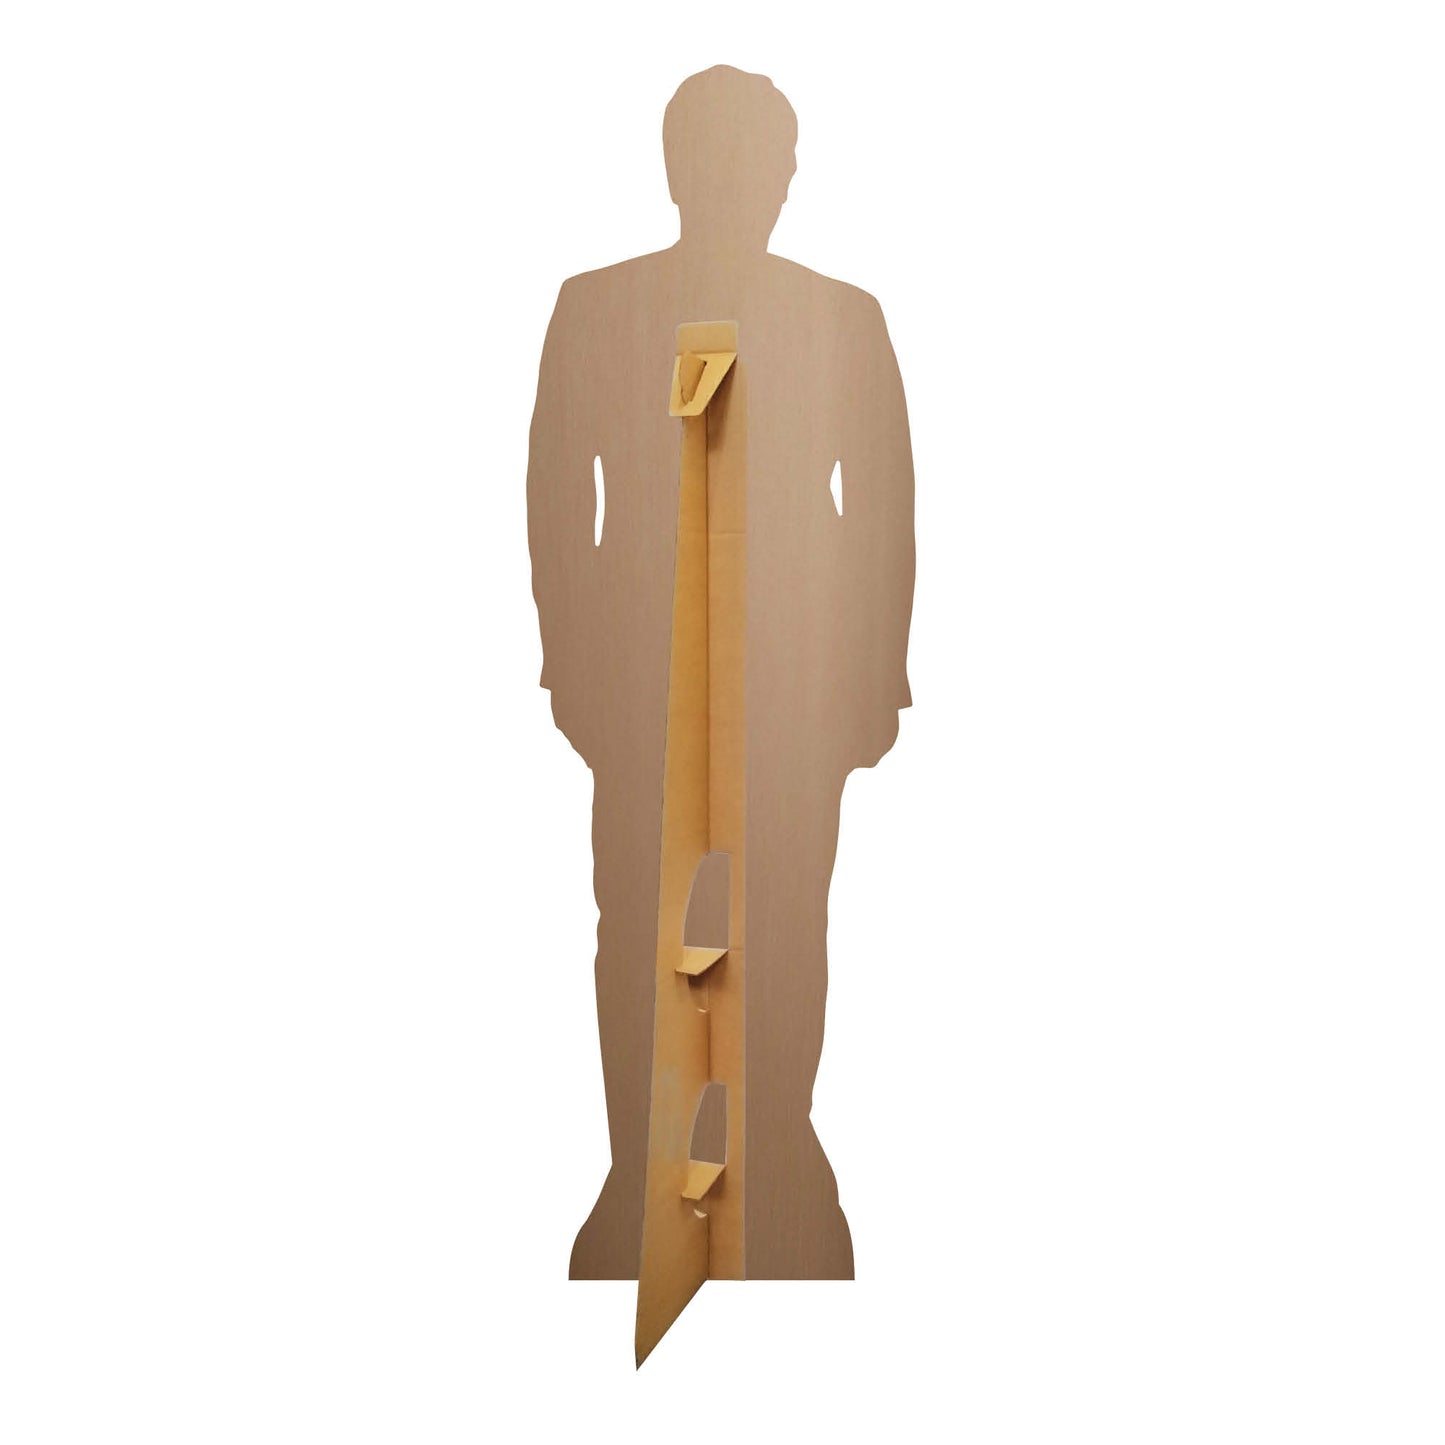 CS1121 Josh Hutcherson Height 165cm Cardboard Cutout